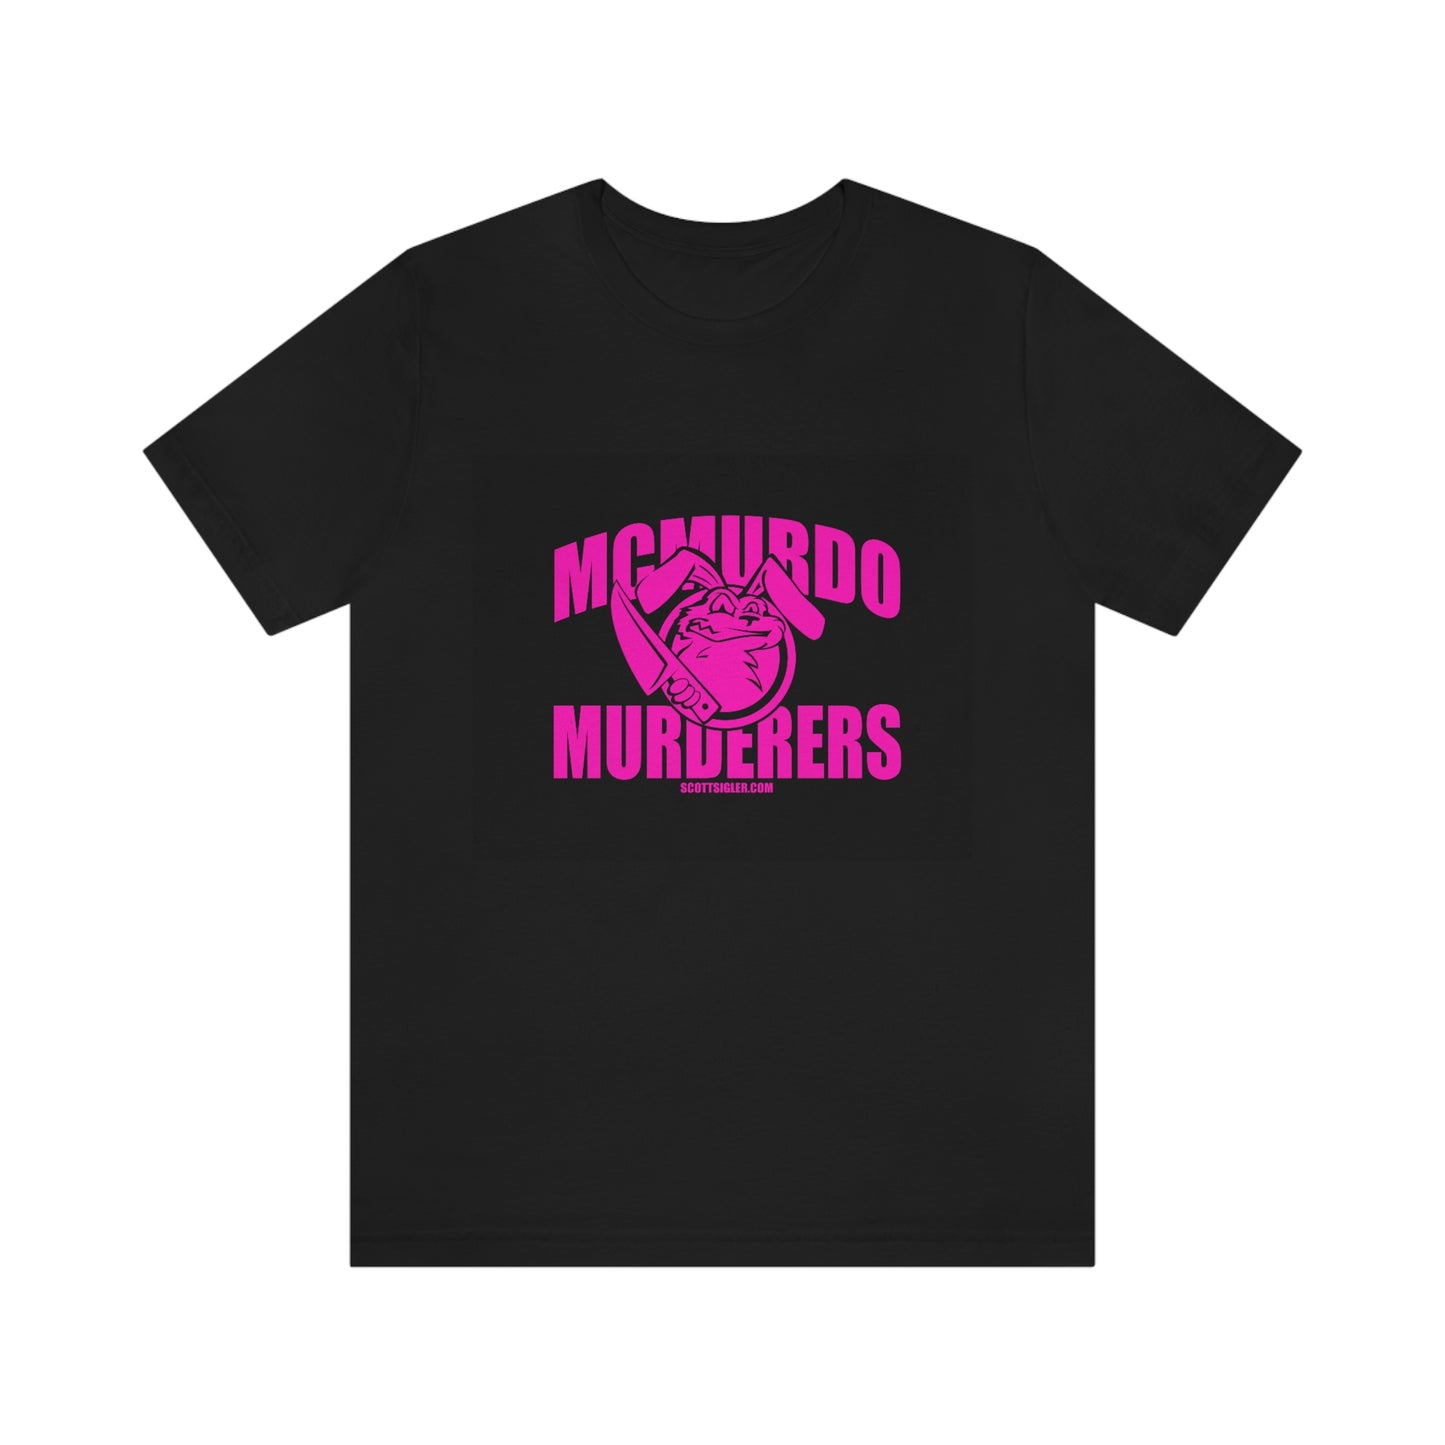 McMurdo Murderers